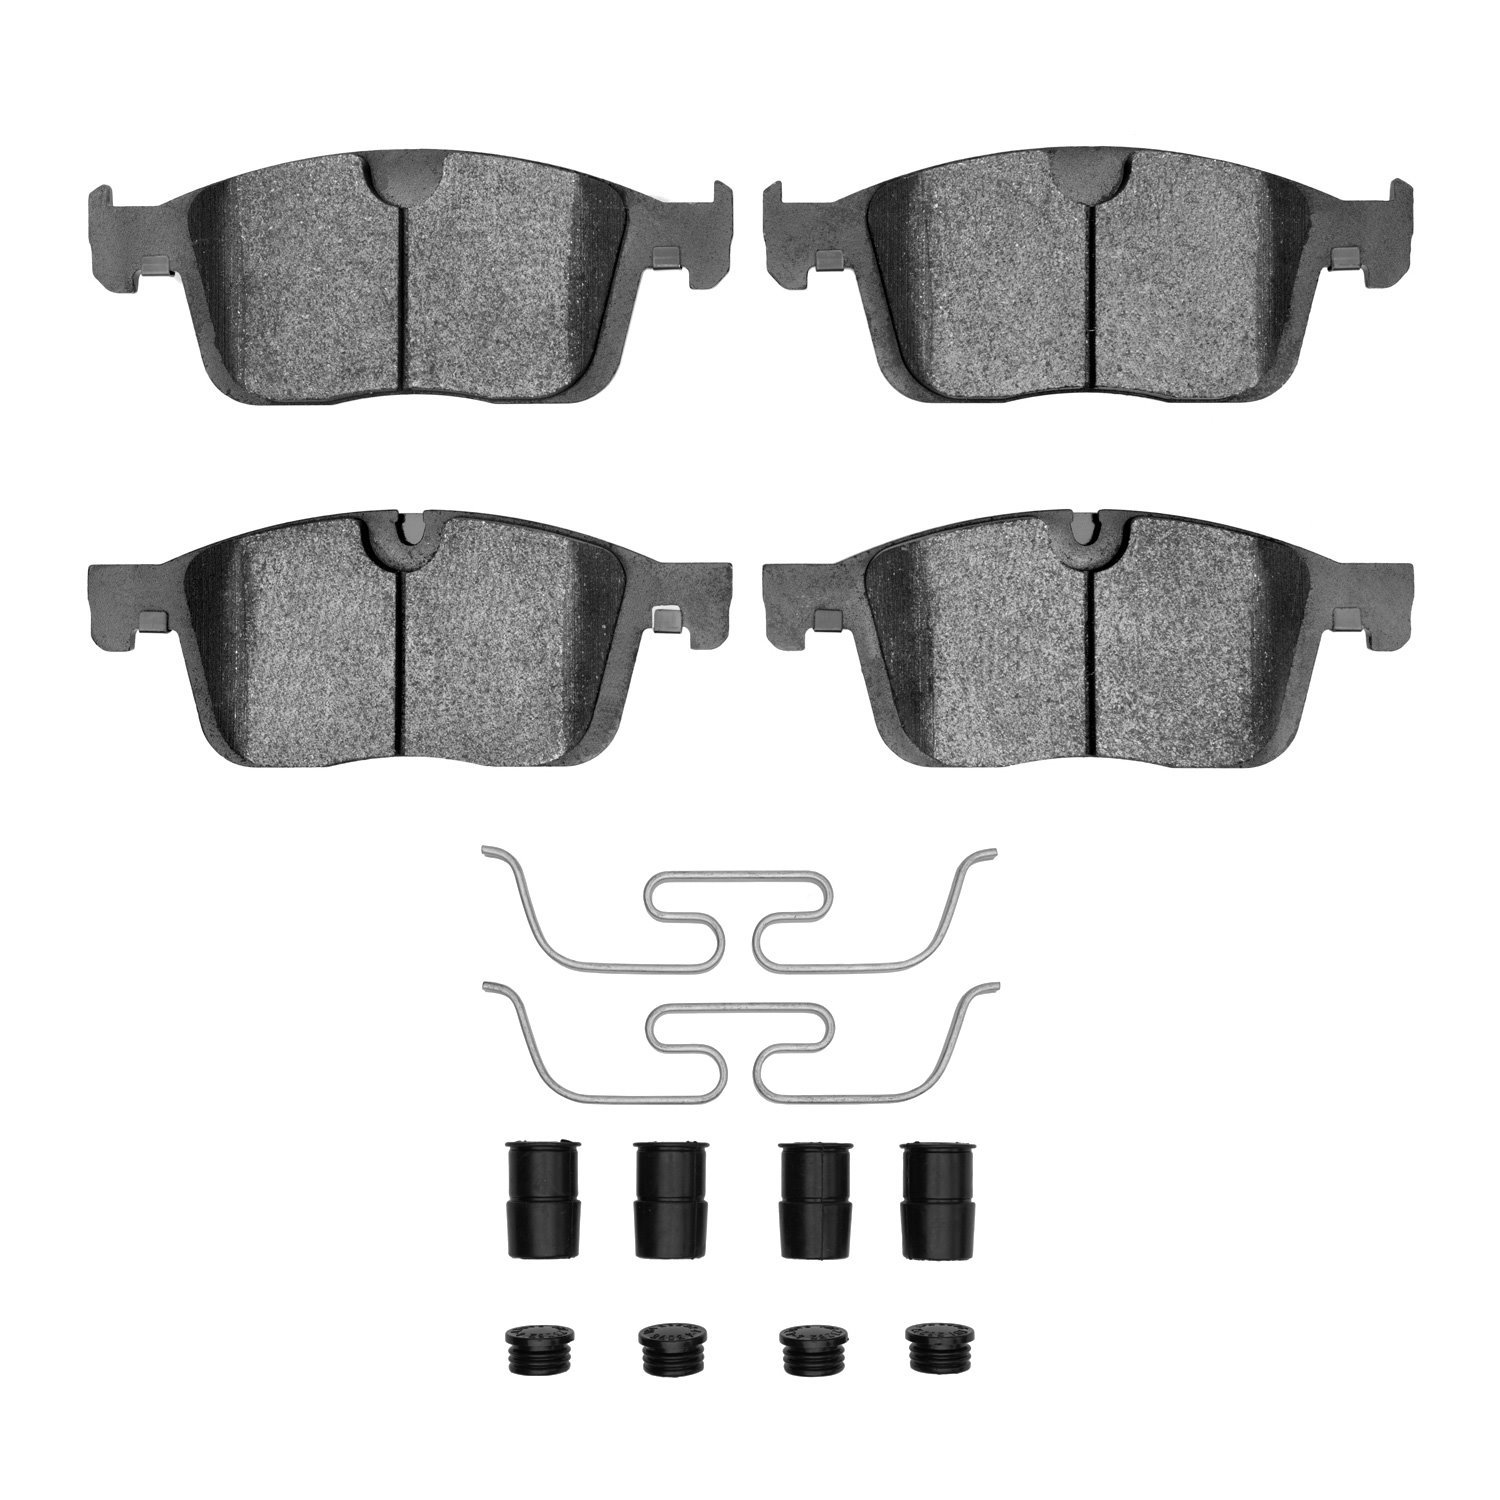 1600-1866-01 5000 Euro Ceramic Brake Pads & Hardware Kit, 2016-2017 Volvo, Position: Front